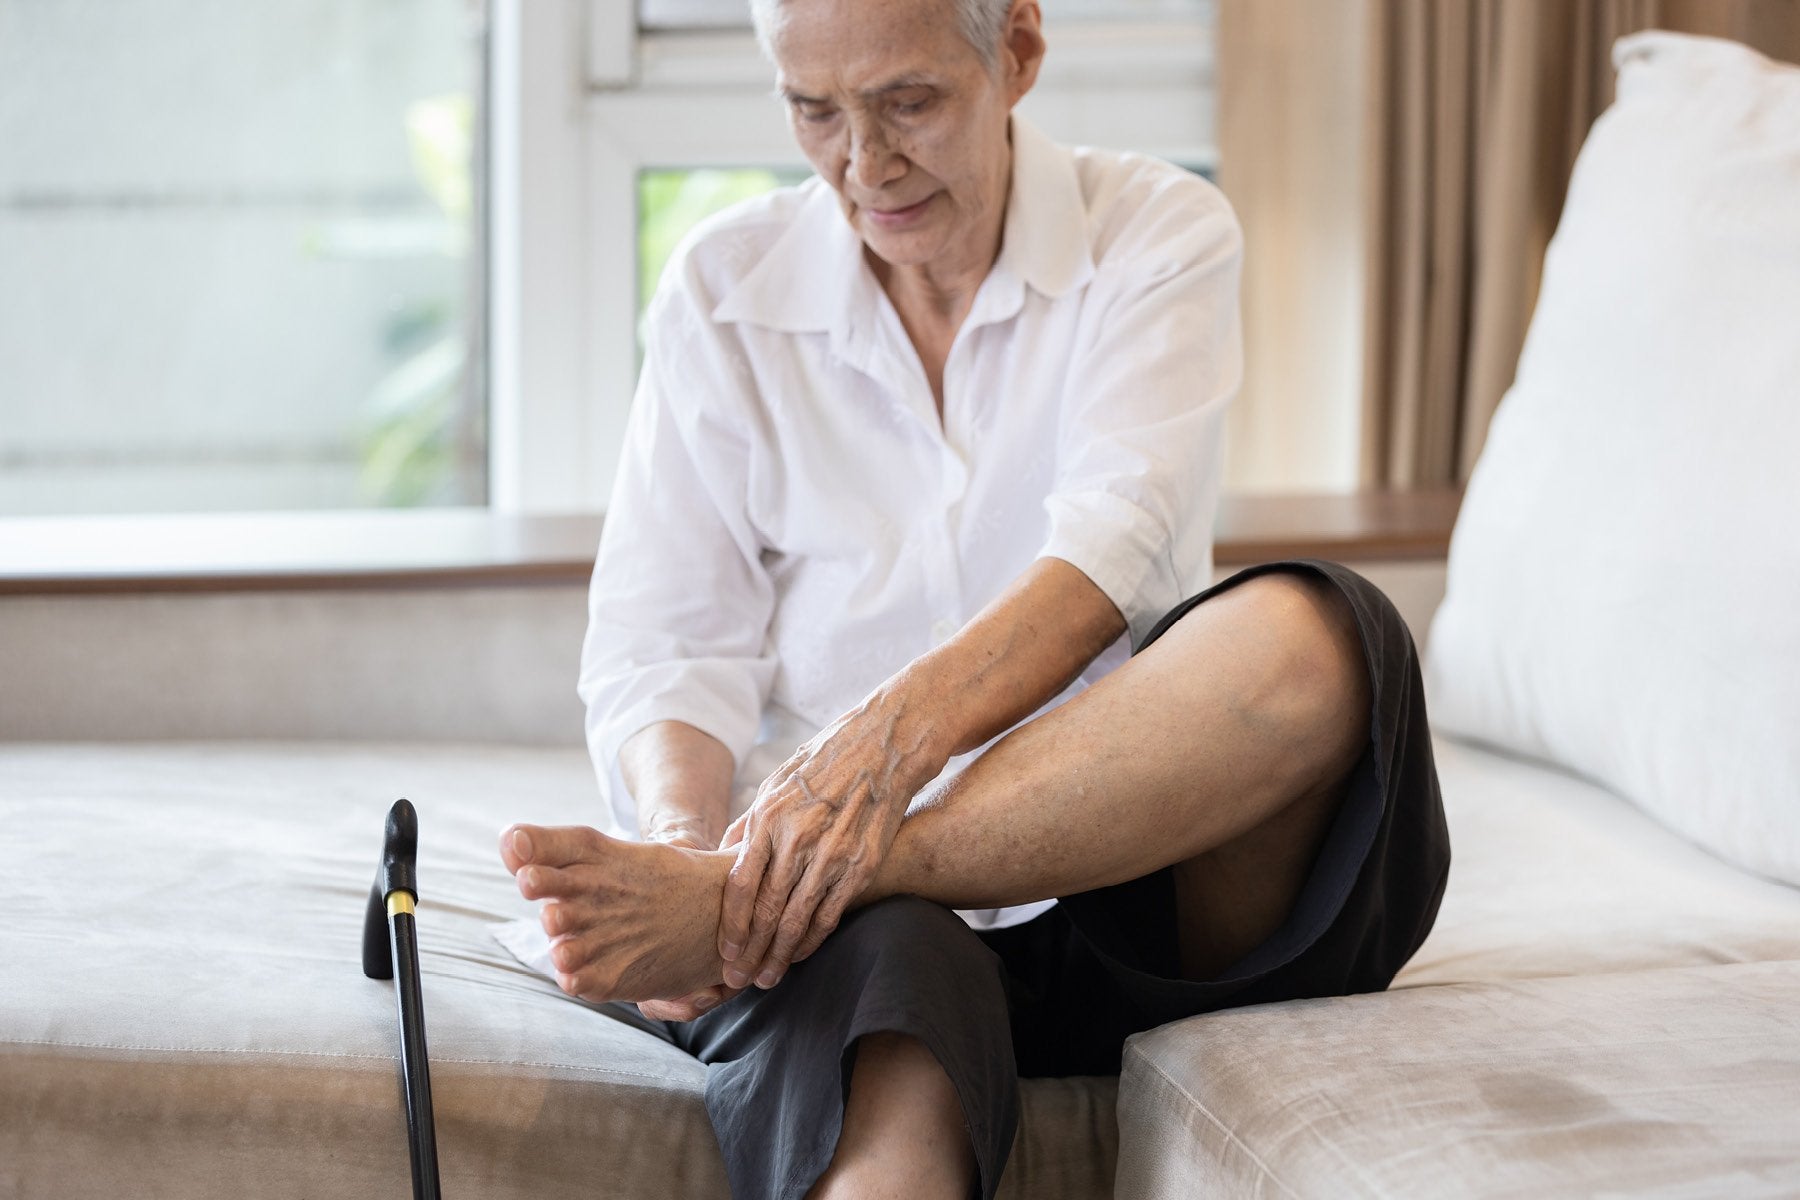 Foot Massager for Foot Pain in Elderly | Cloud Massage